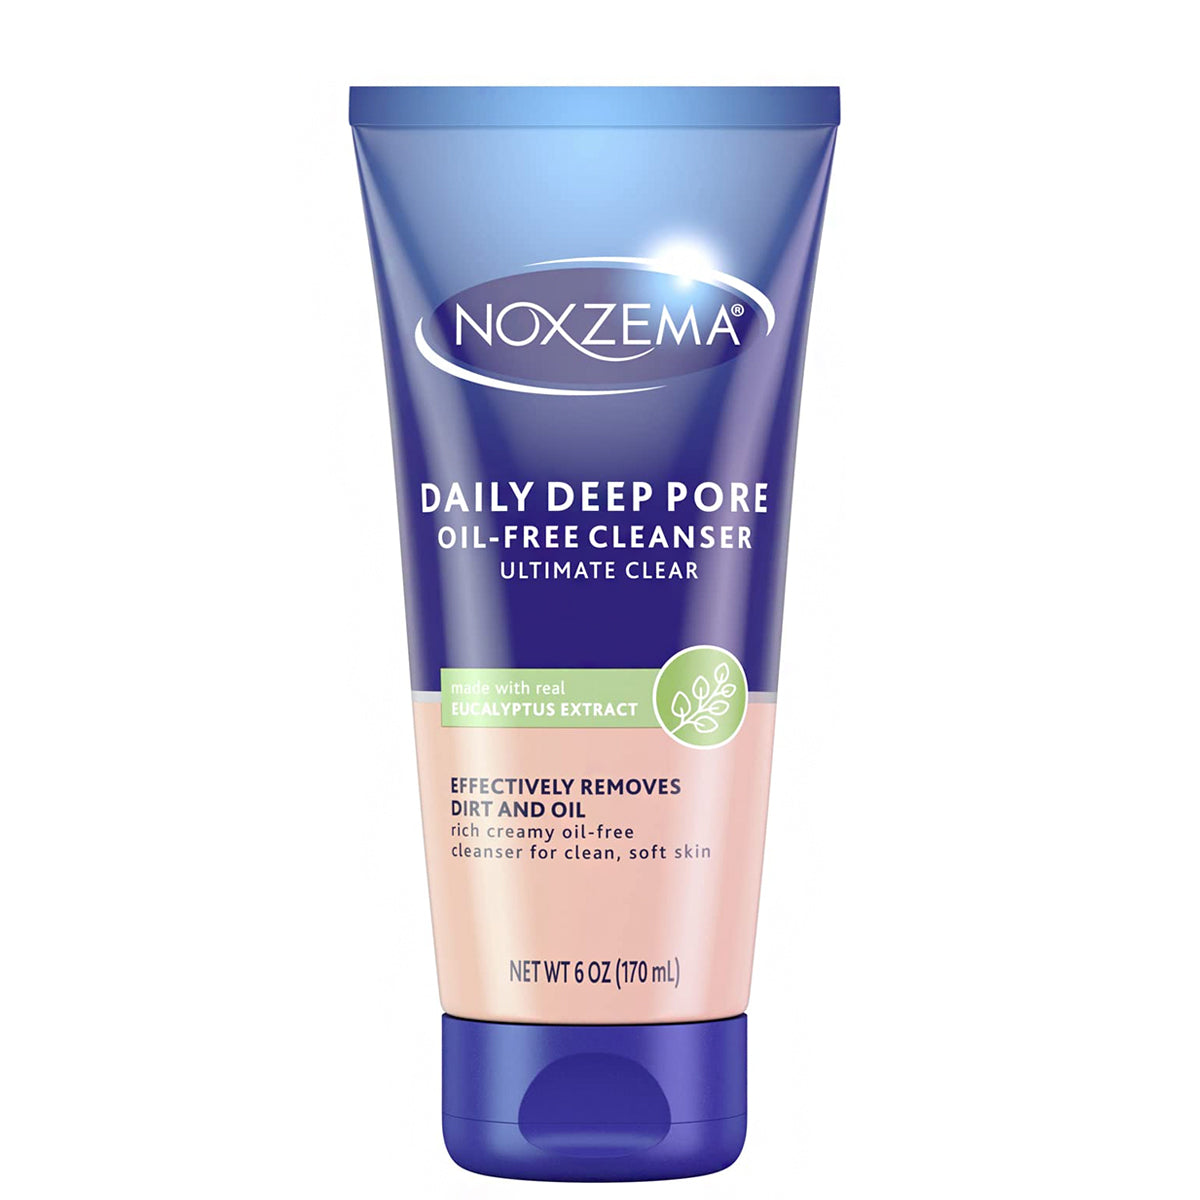 Noxzema Daily Deep Pore Oil-Free Cleanser 6oz